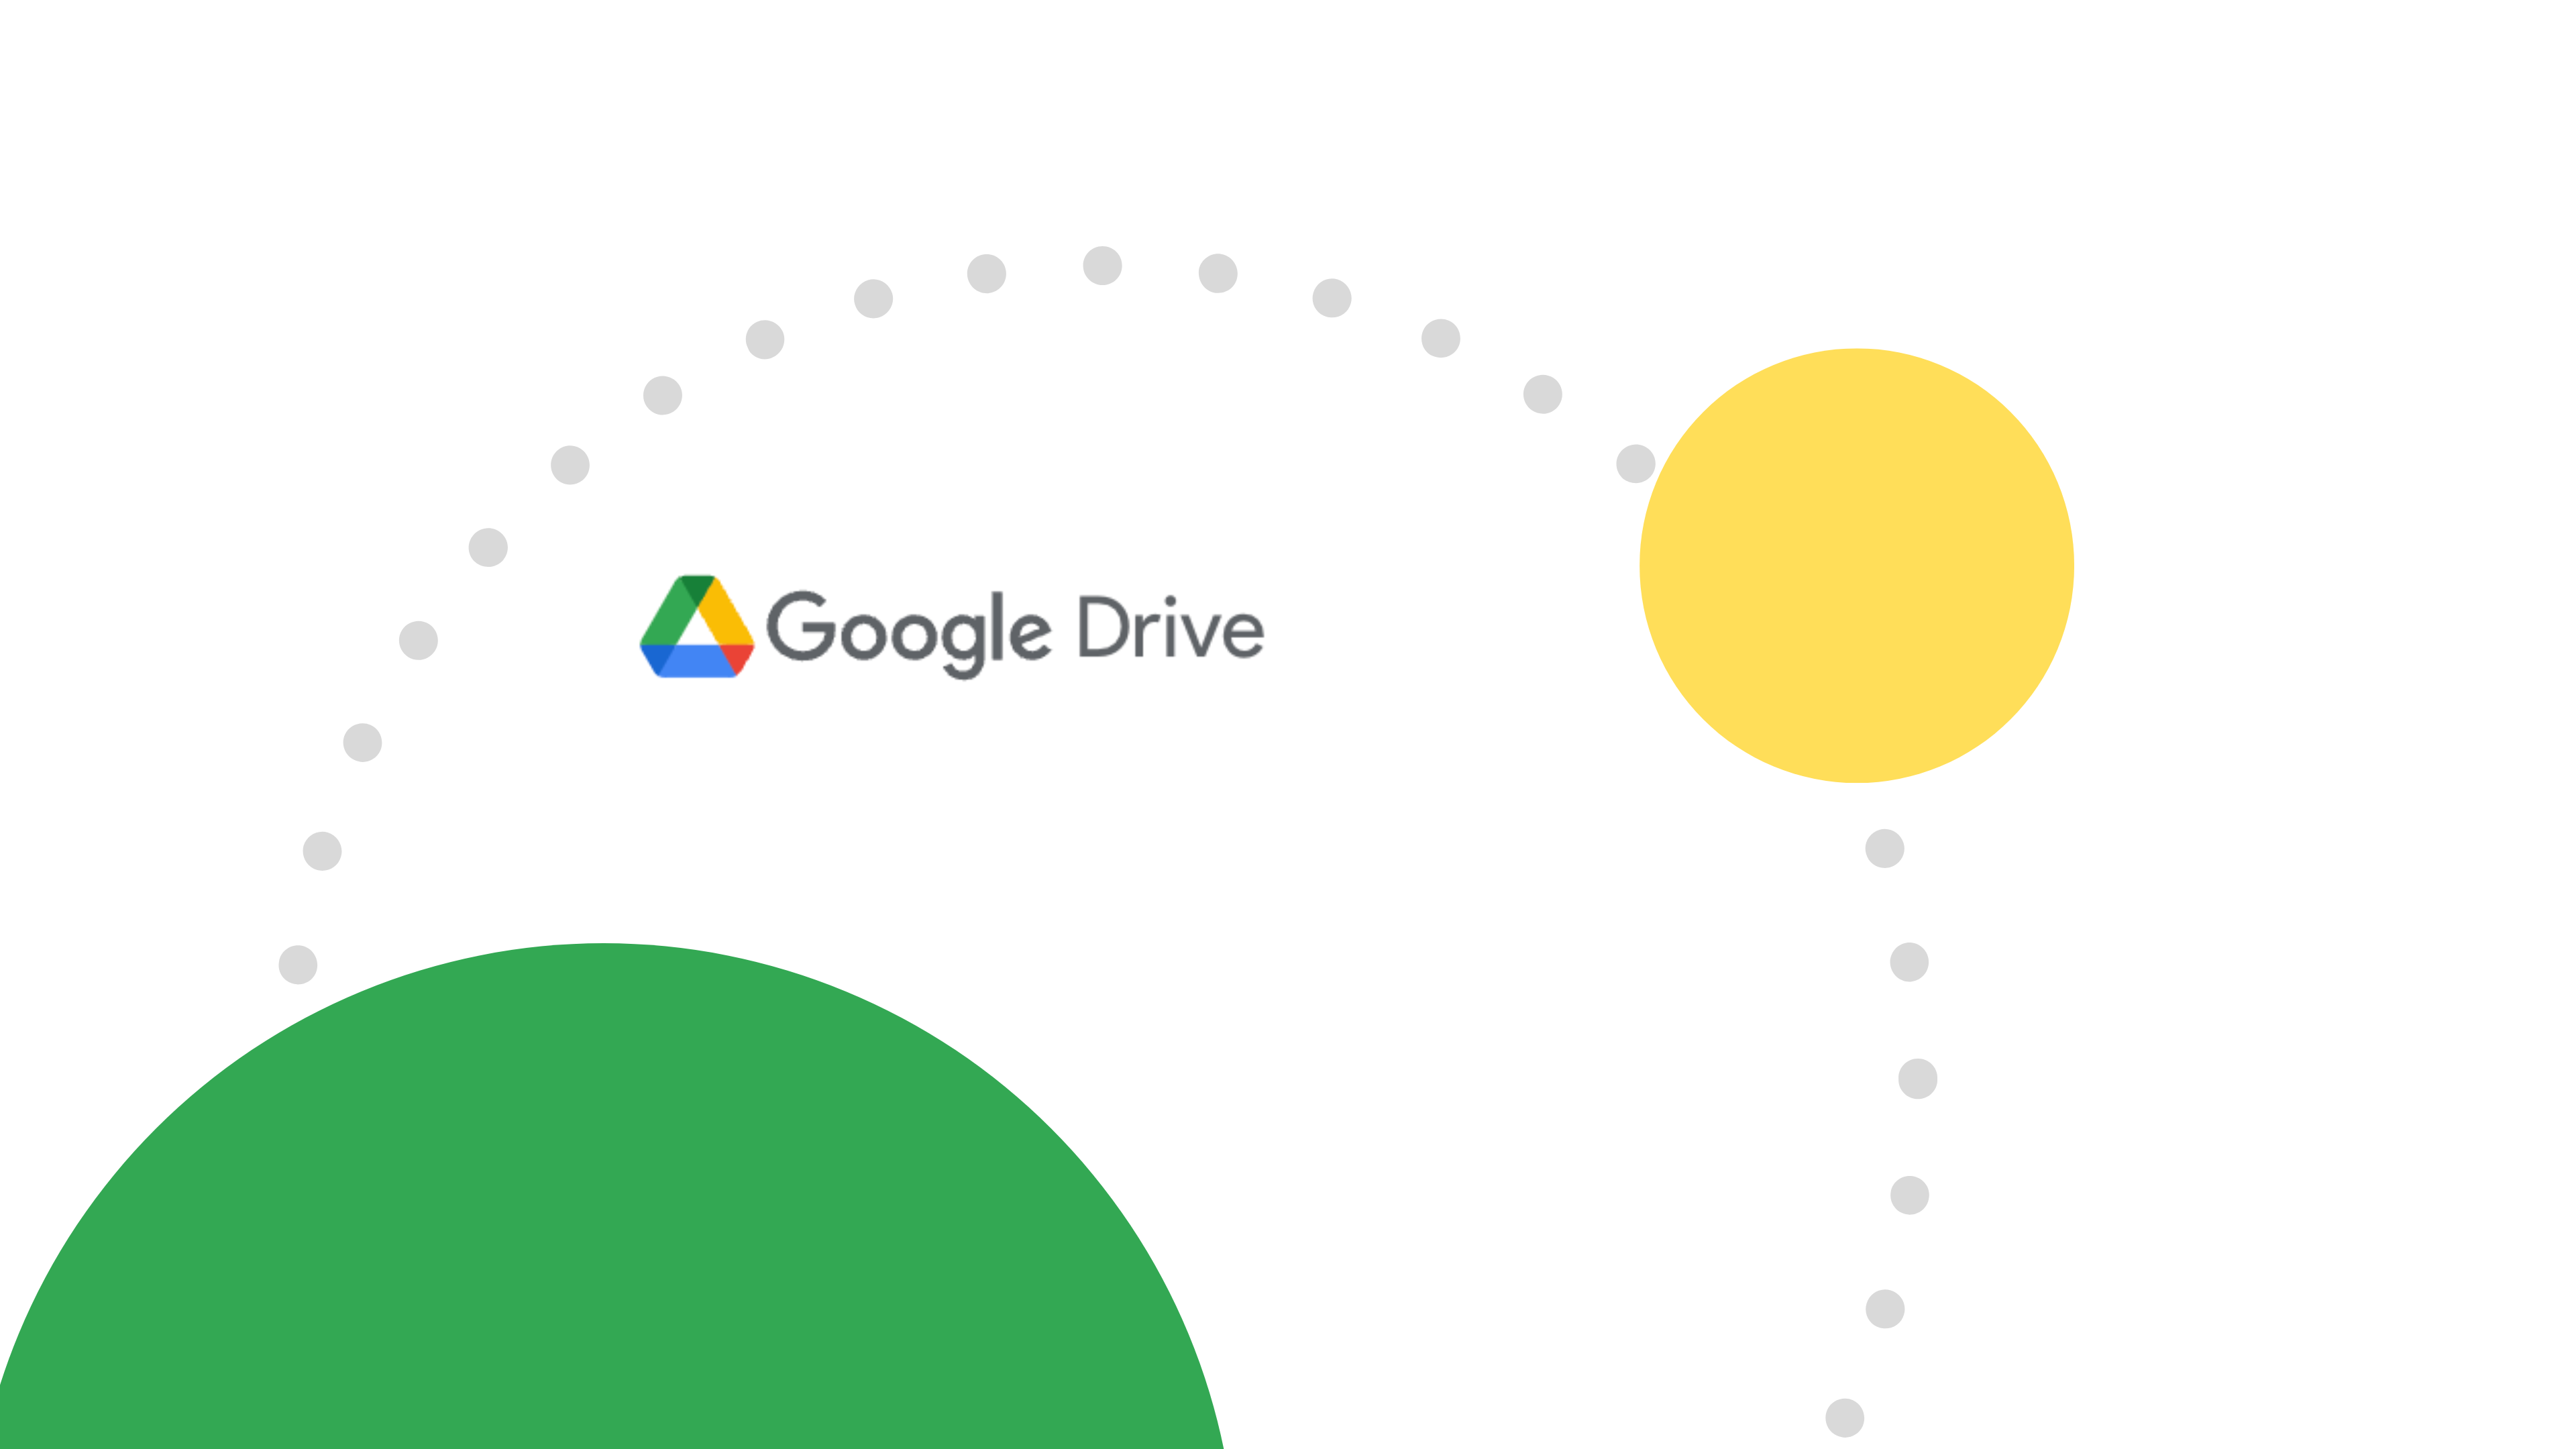 Google Drive logo in green and yellow circular shapes